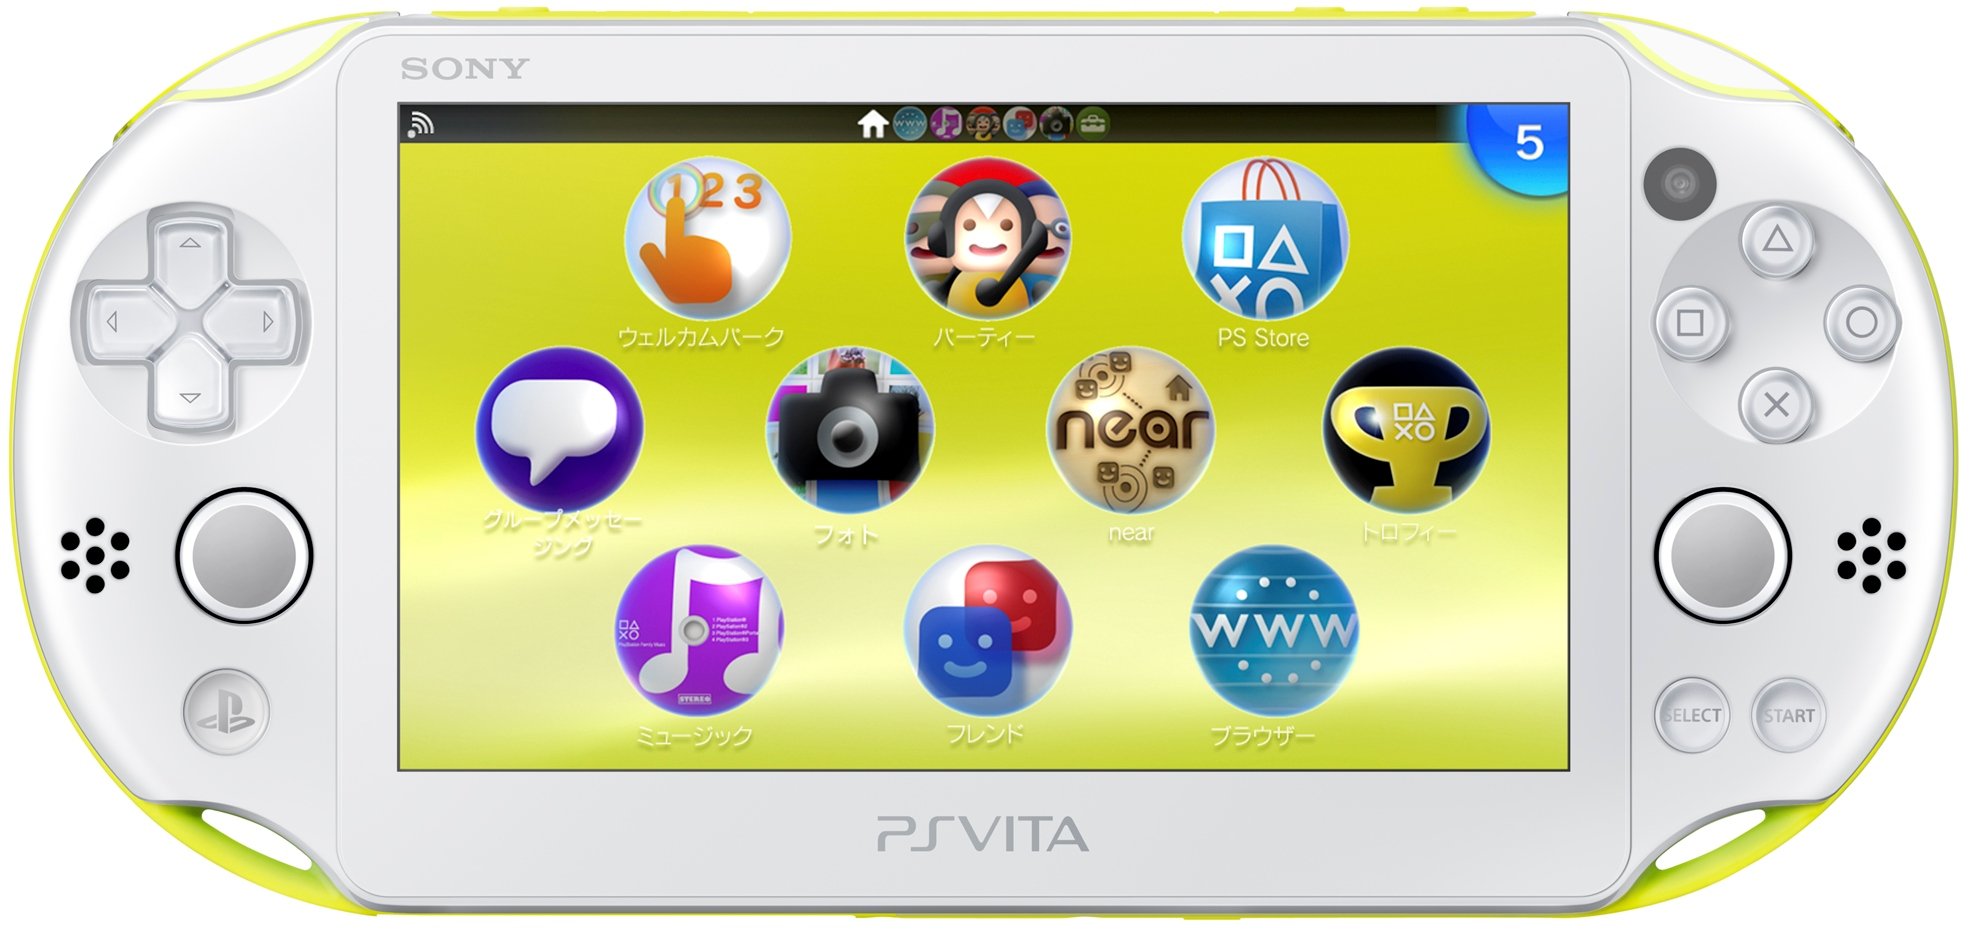 PlayStation Vita （PCH-2000シリーズ） Wi-Fiモデル ライムグリーン/ホワイト PCH-2000ZA13の商品画像